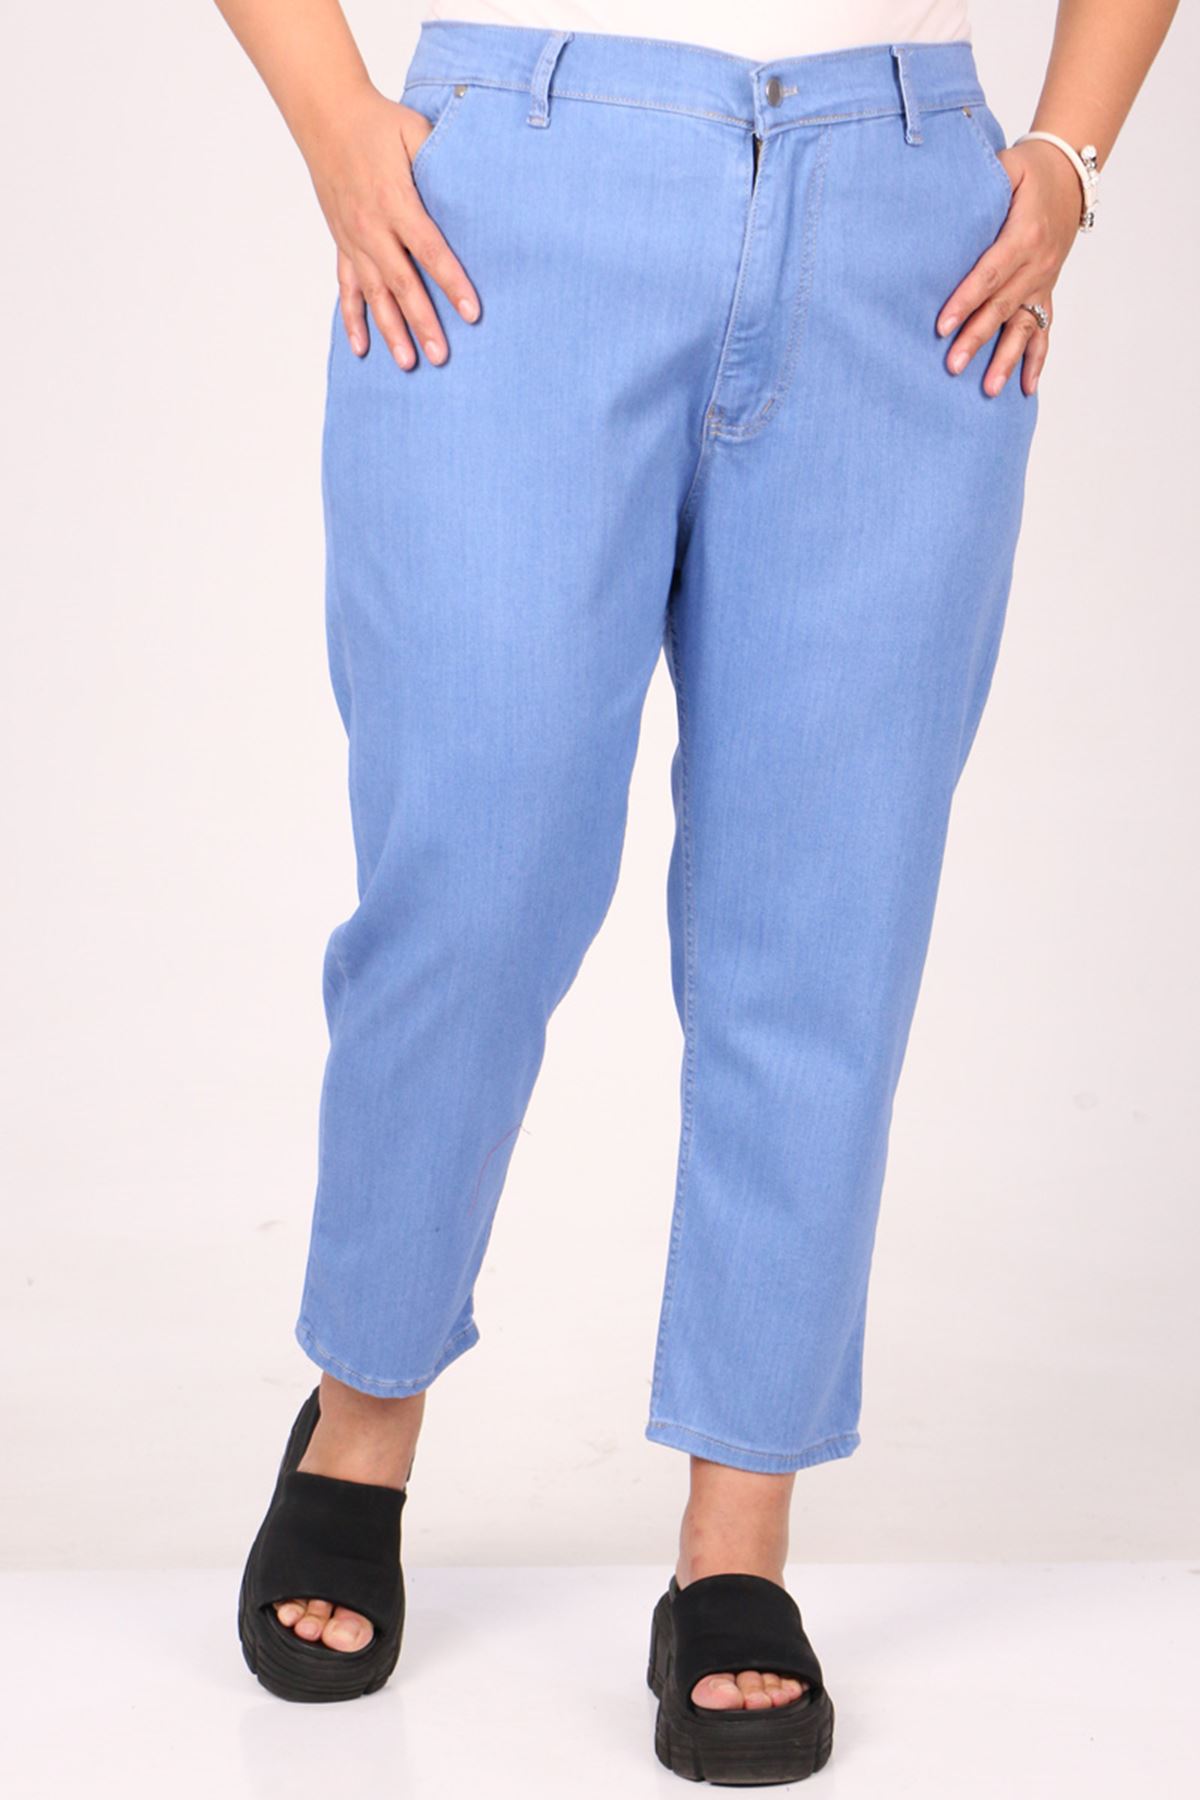 9125-2 Big Size Friend Jeans-Navy Blue